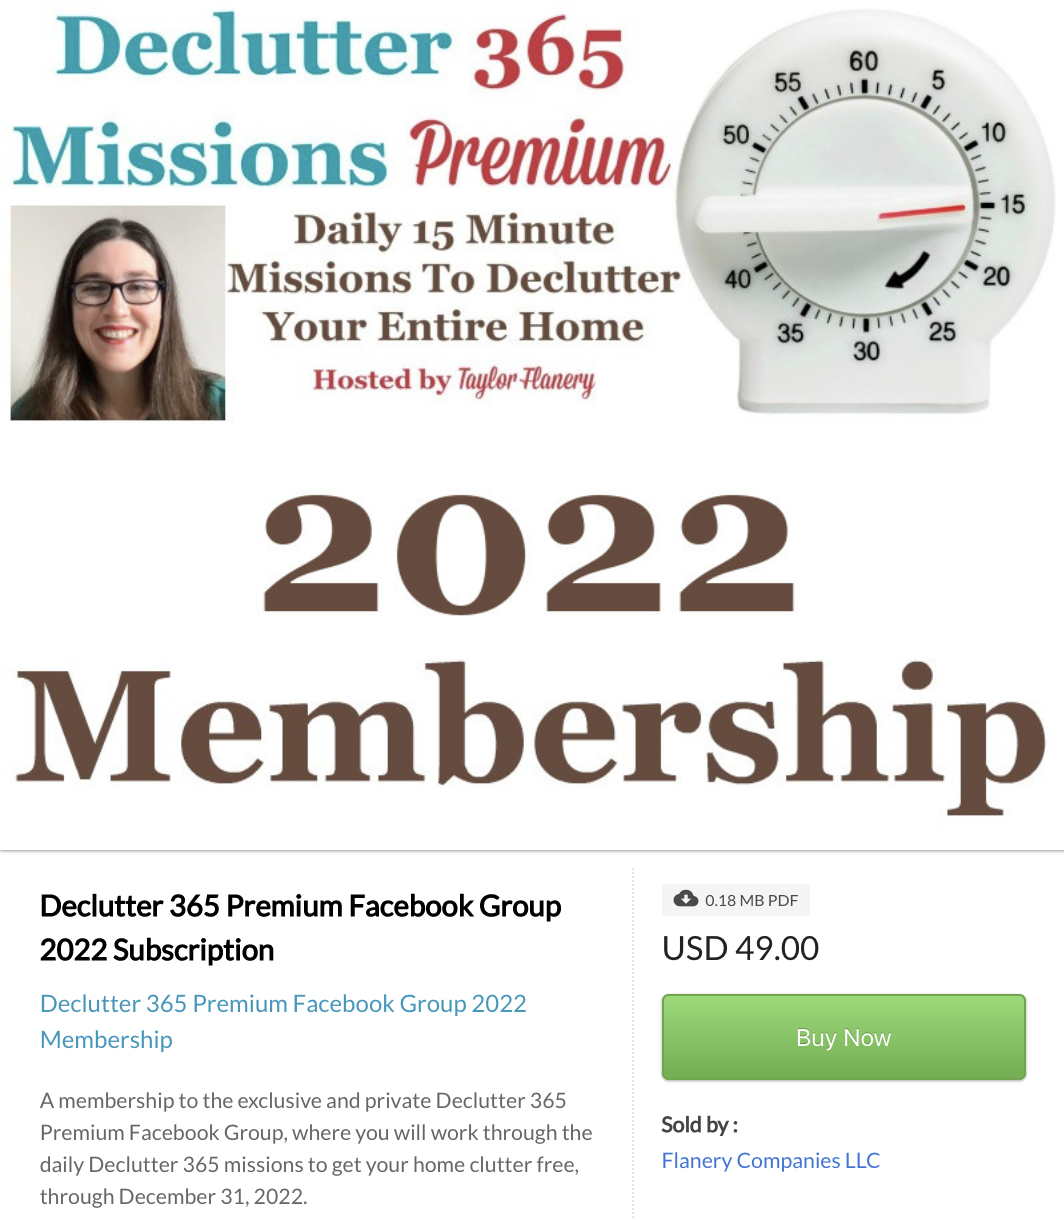 Click here to buy Declutter 365 Premium 2022 Membership